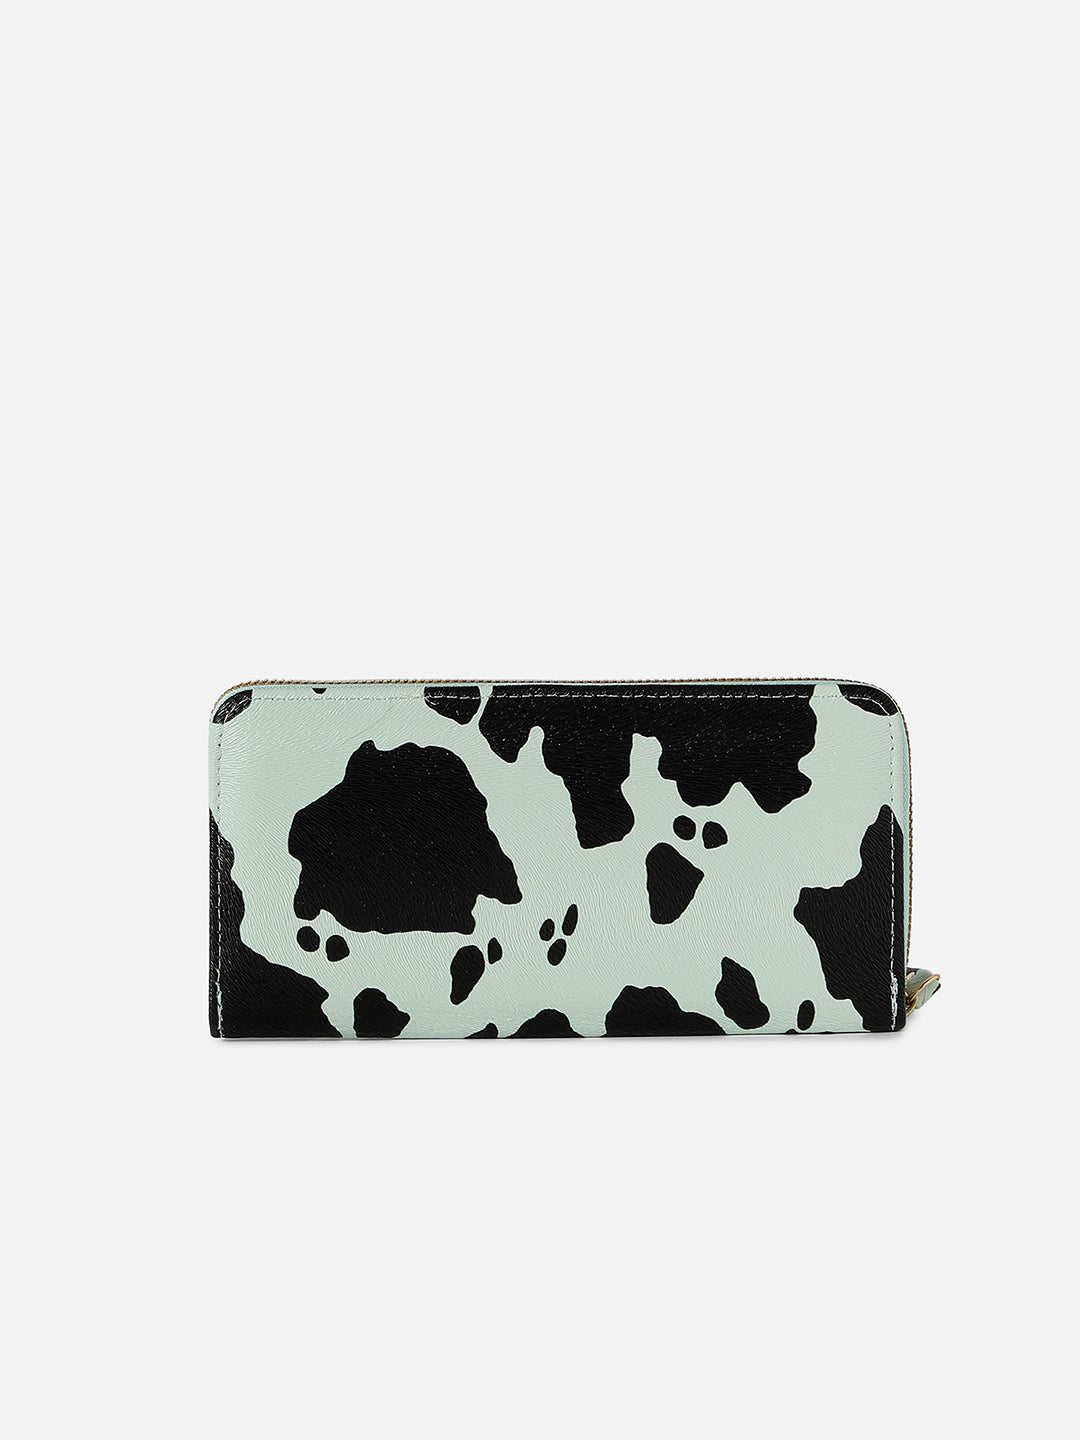 Mint Green & Black Cow Printed Vegan Leather Wallet